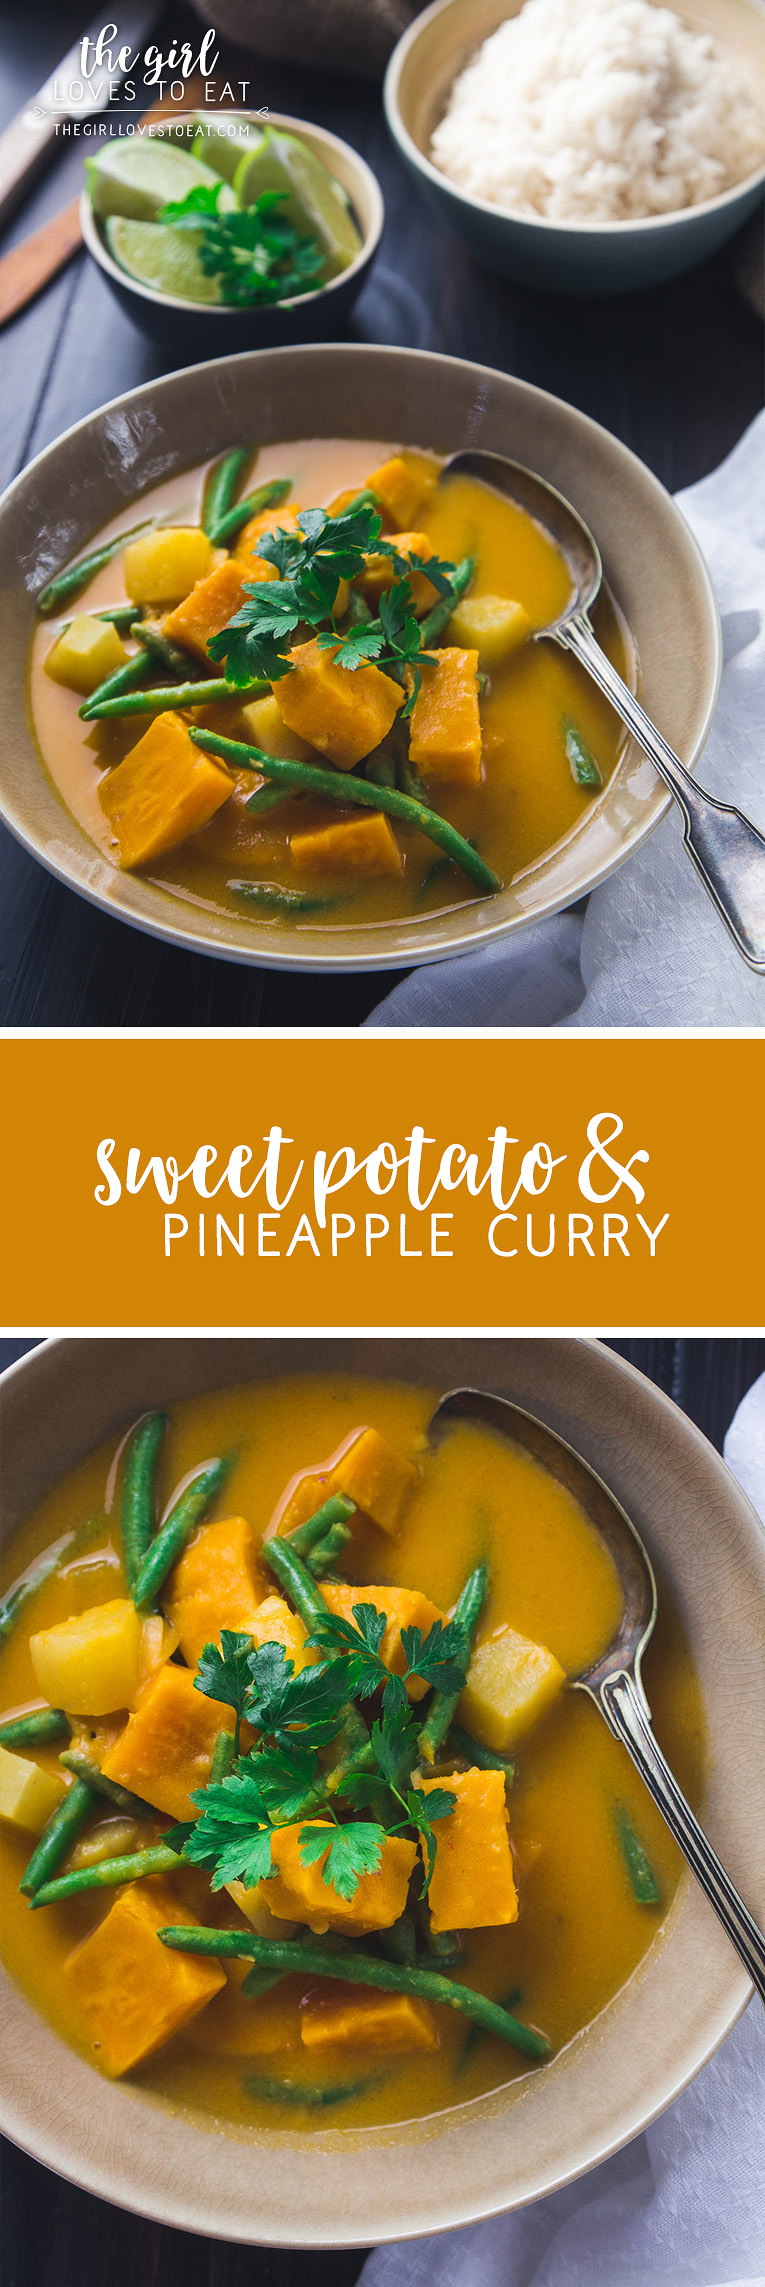 Sweet potato and pineapple curry { thegirllovestoeat.com }